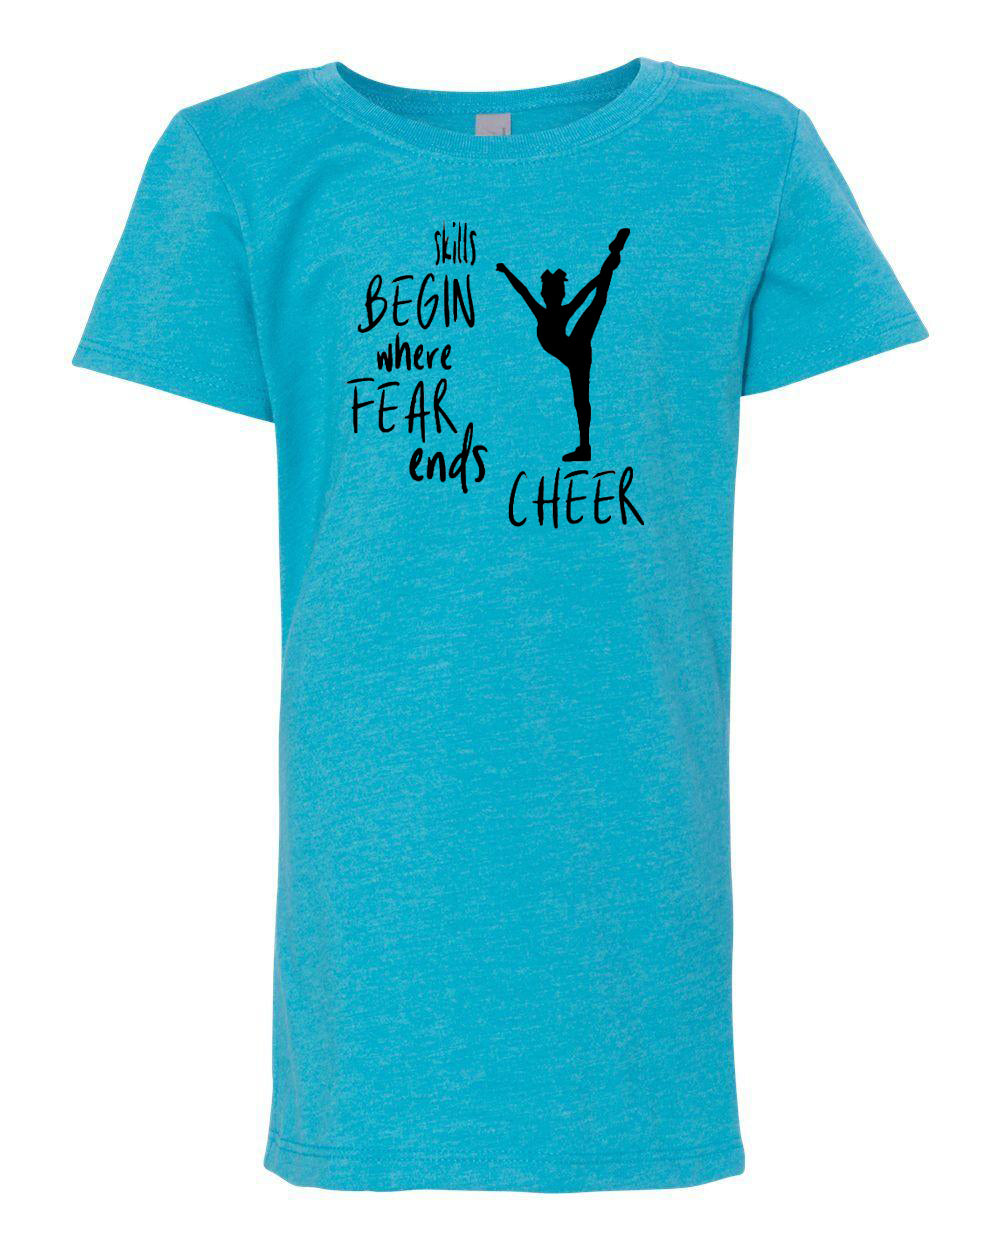 Skills Begin Where Fear Ends Cheer Girls T-Shirt Ocean Blue